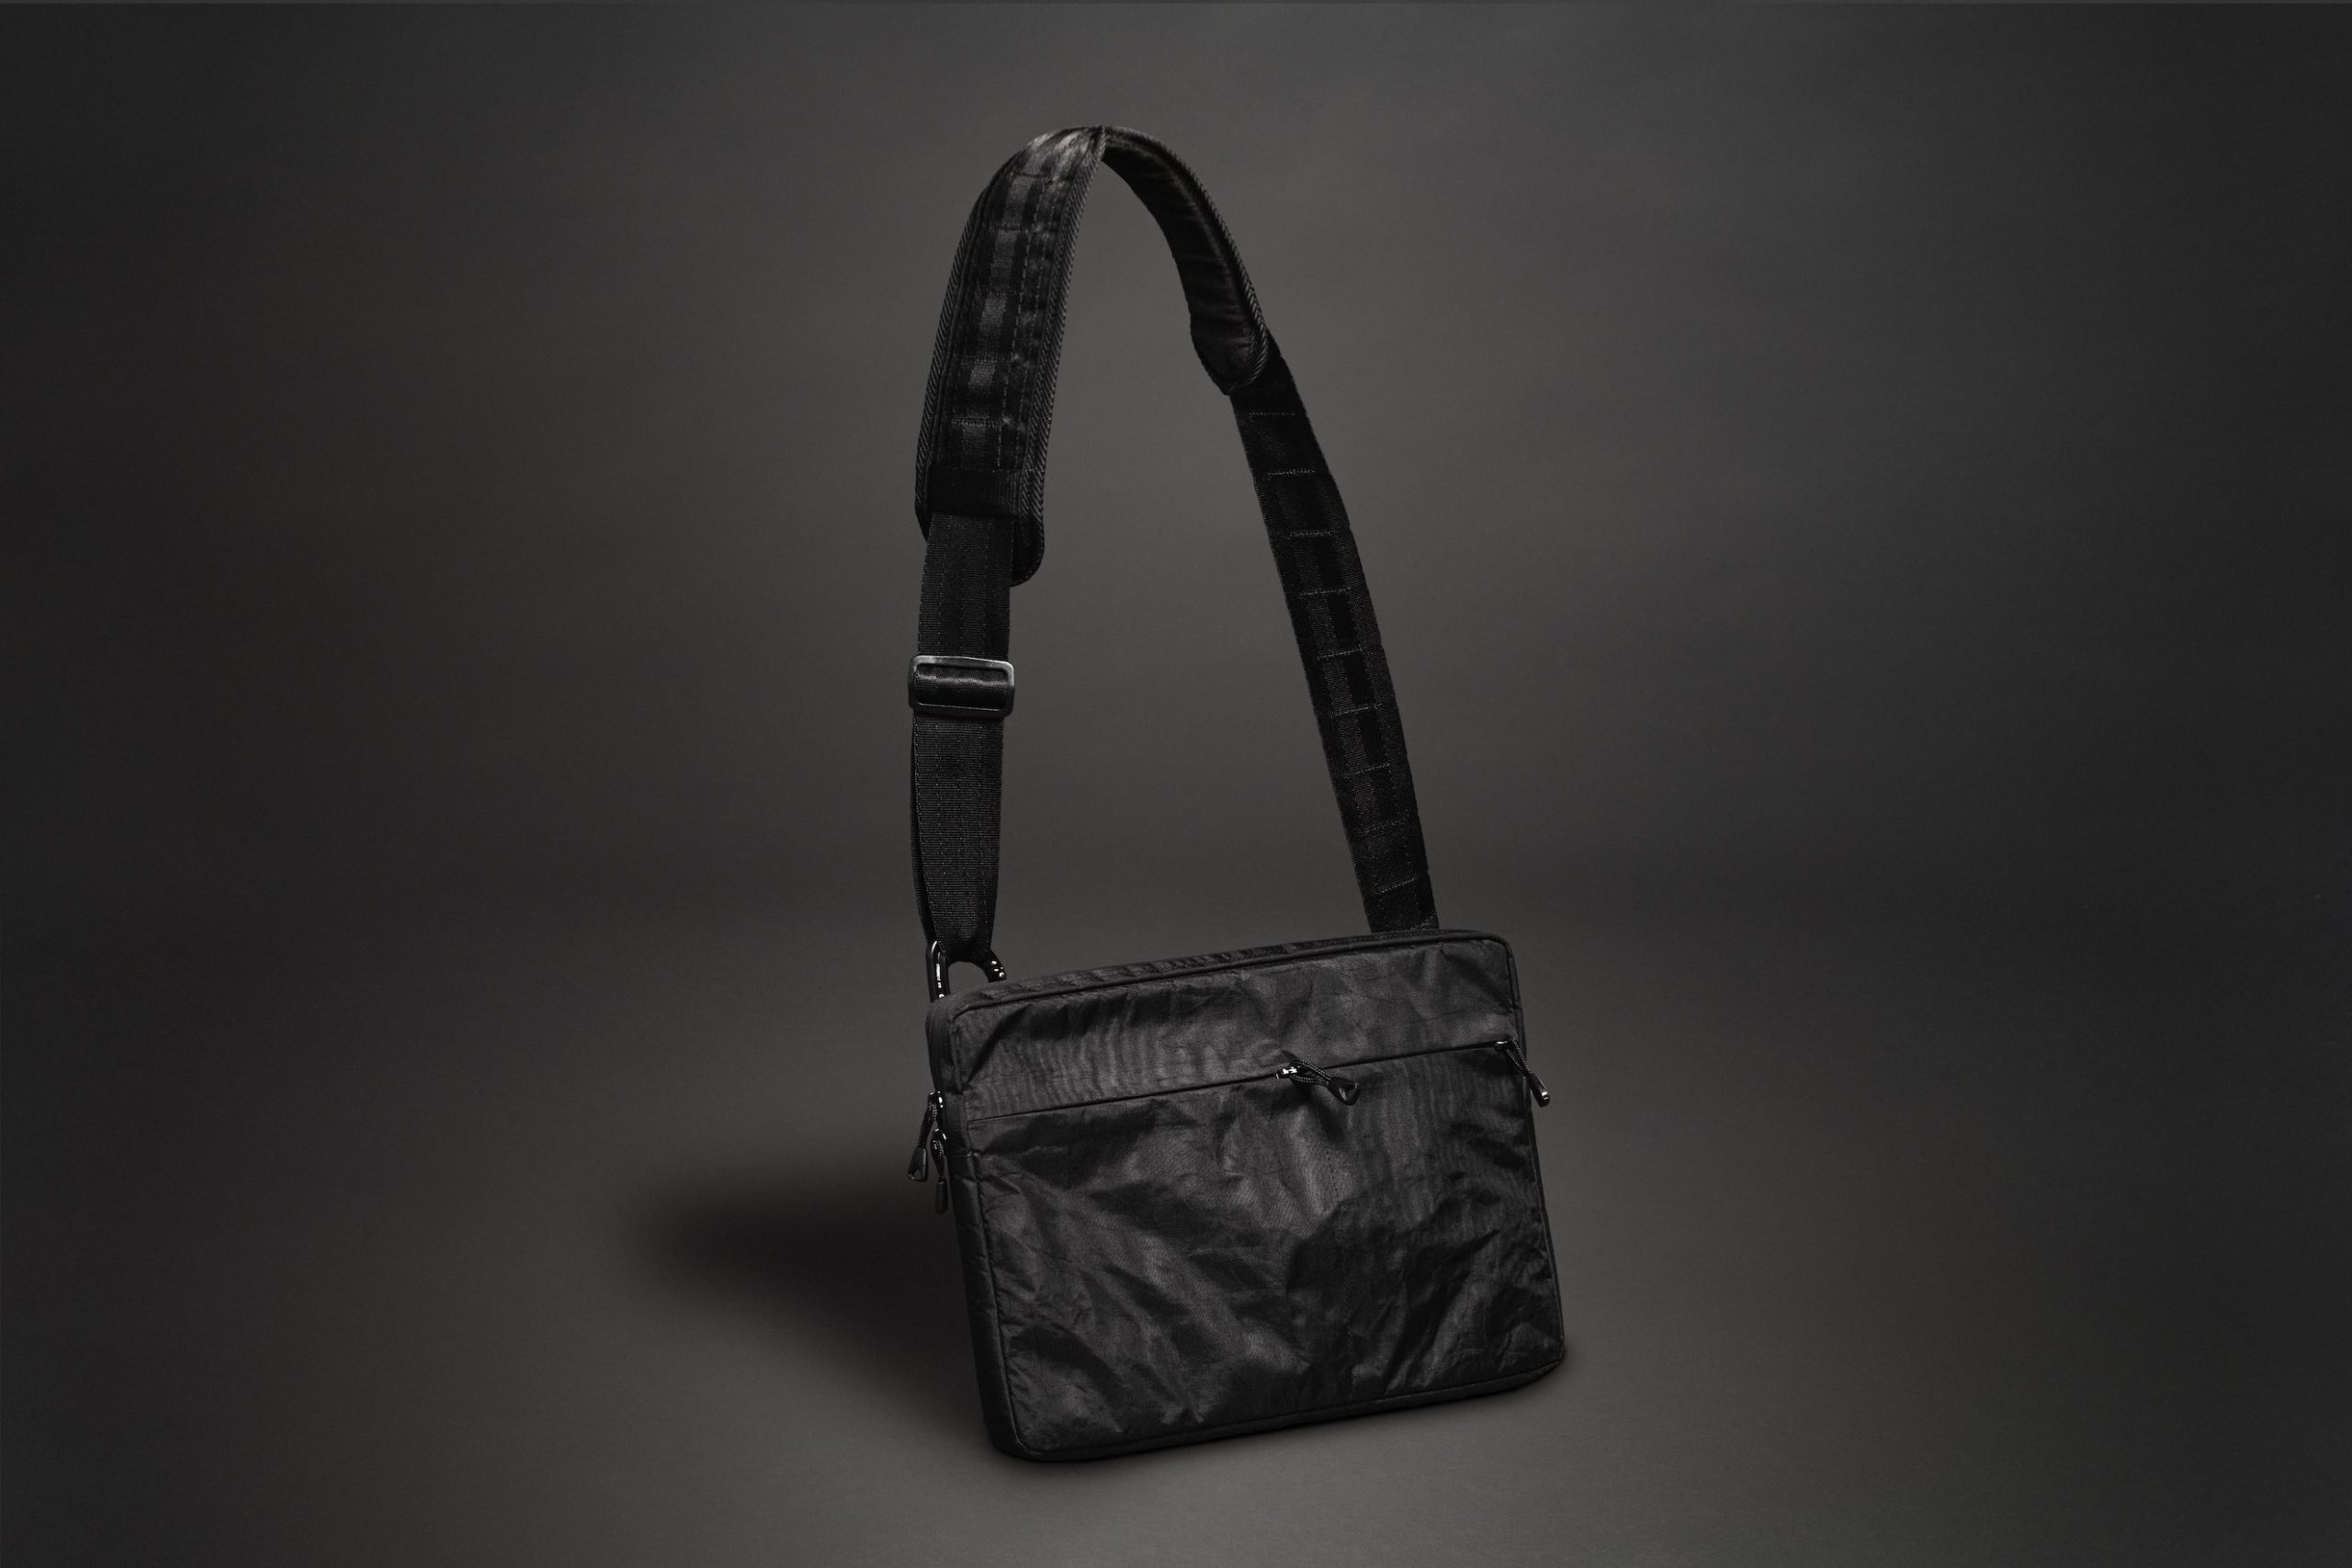 Black Mile Travel Bag Product Photography Black purse on display